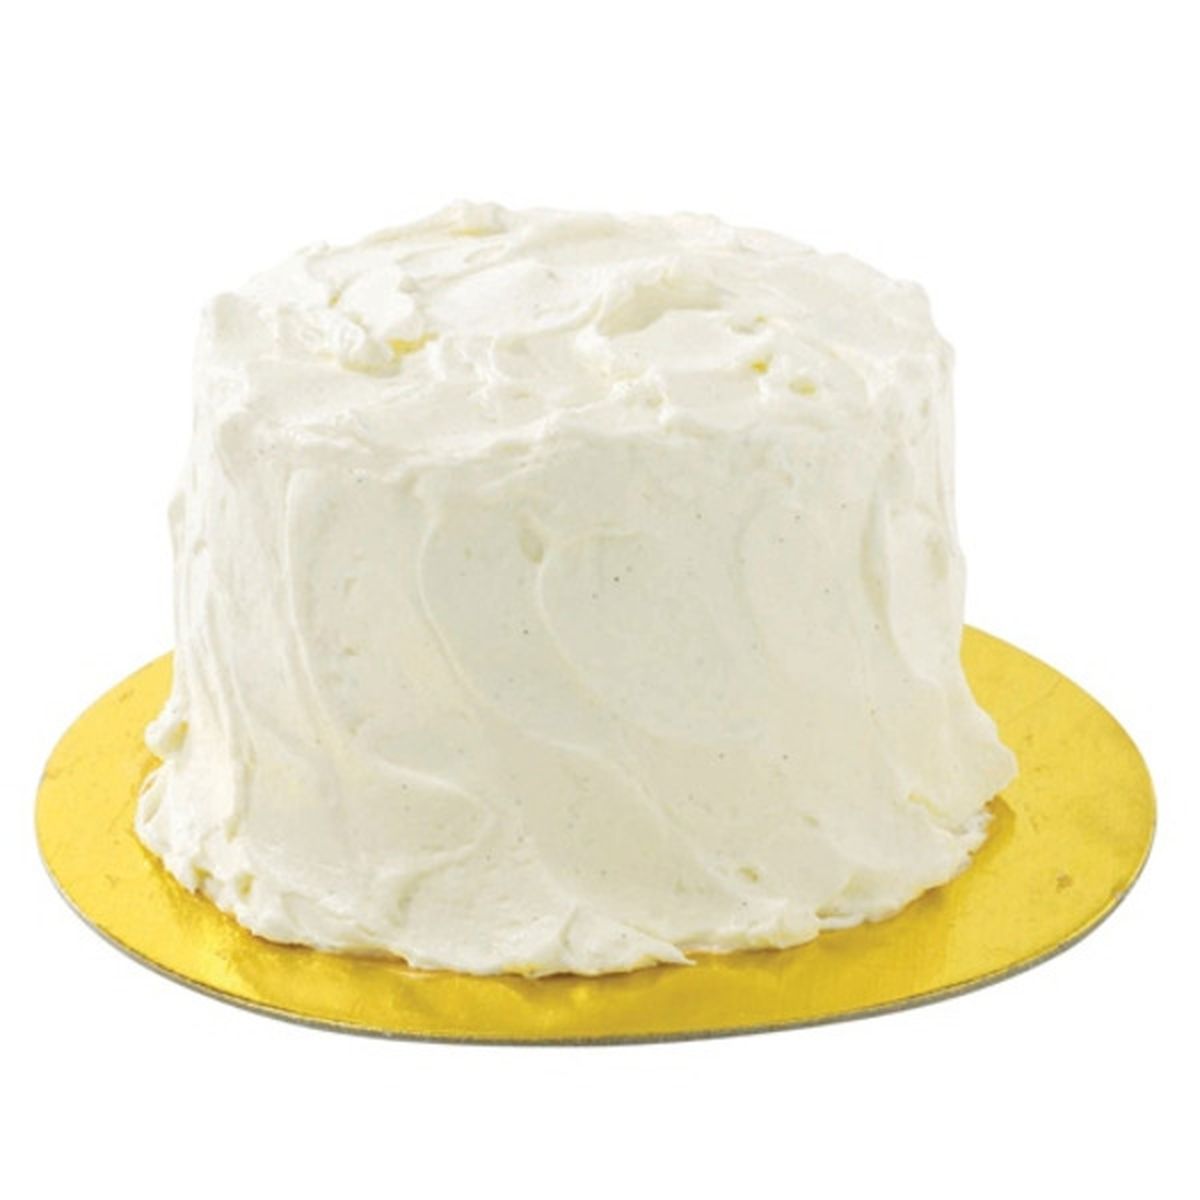 Calories in Wegmans Ultimate Mini White Cake